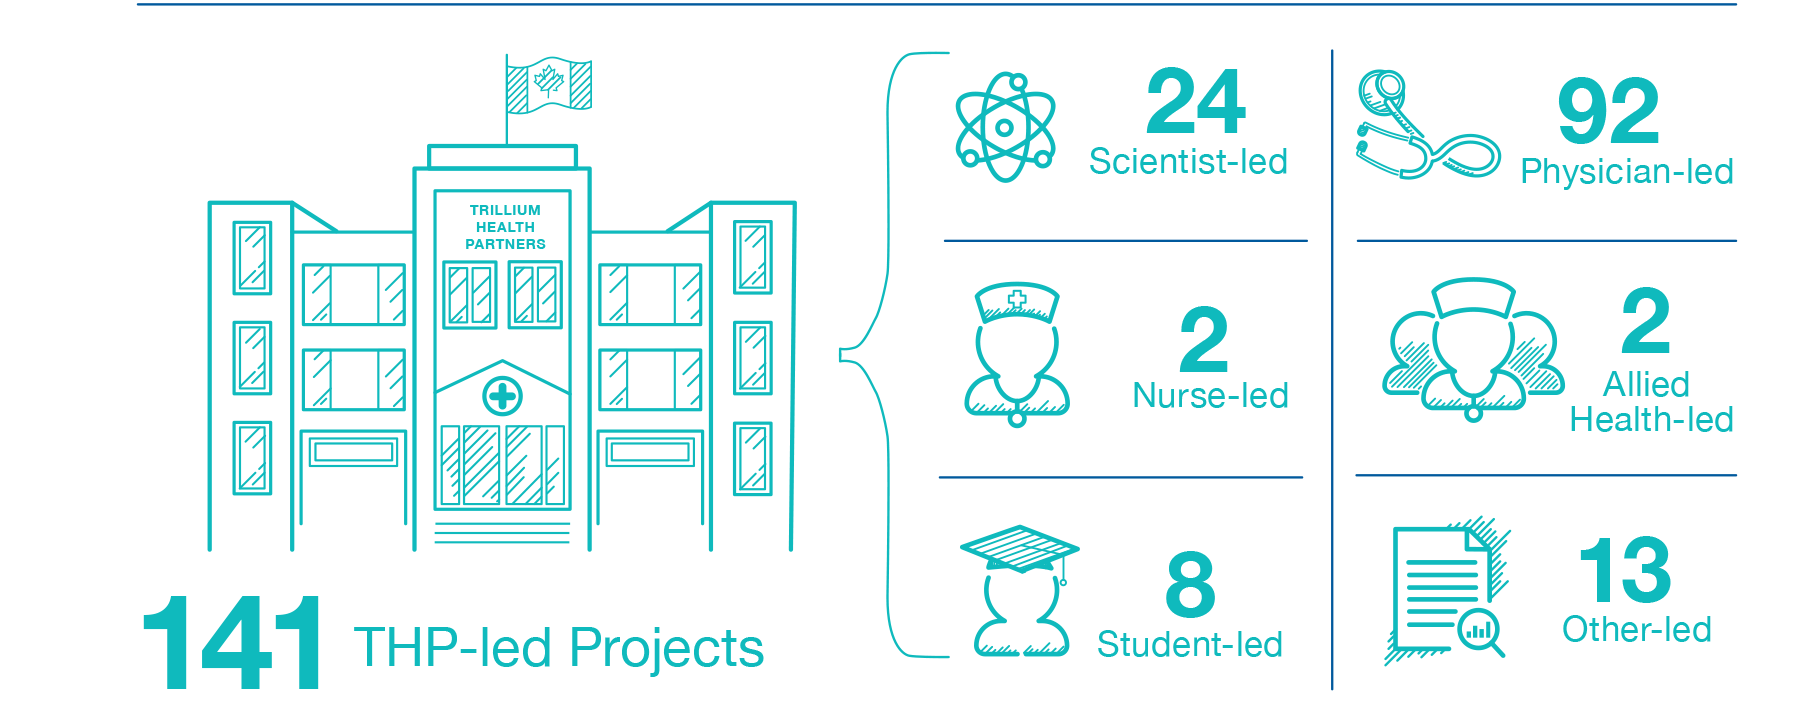 141 THP-led Projects. Of those: 24 Scientist-led, 92 Physician-led, 2 Nurse-led, 2 Allied Health-led. 8 Student-led, 13 Other-led.